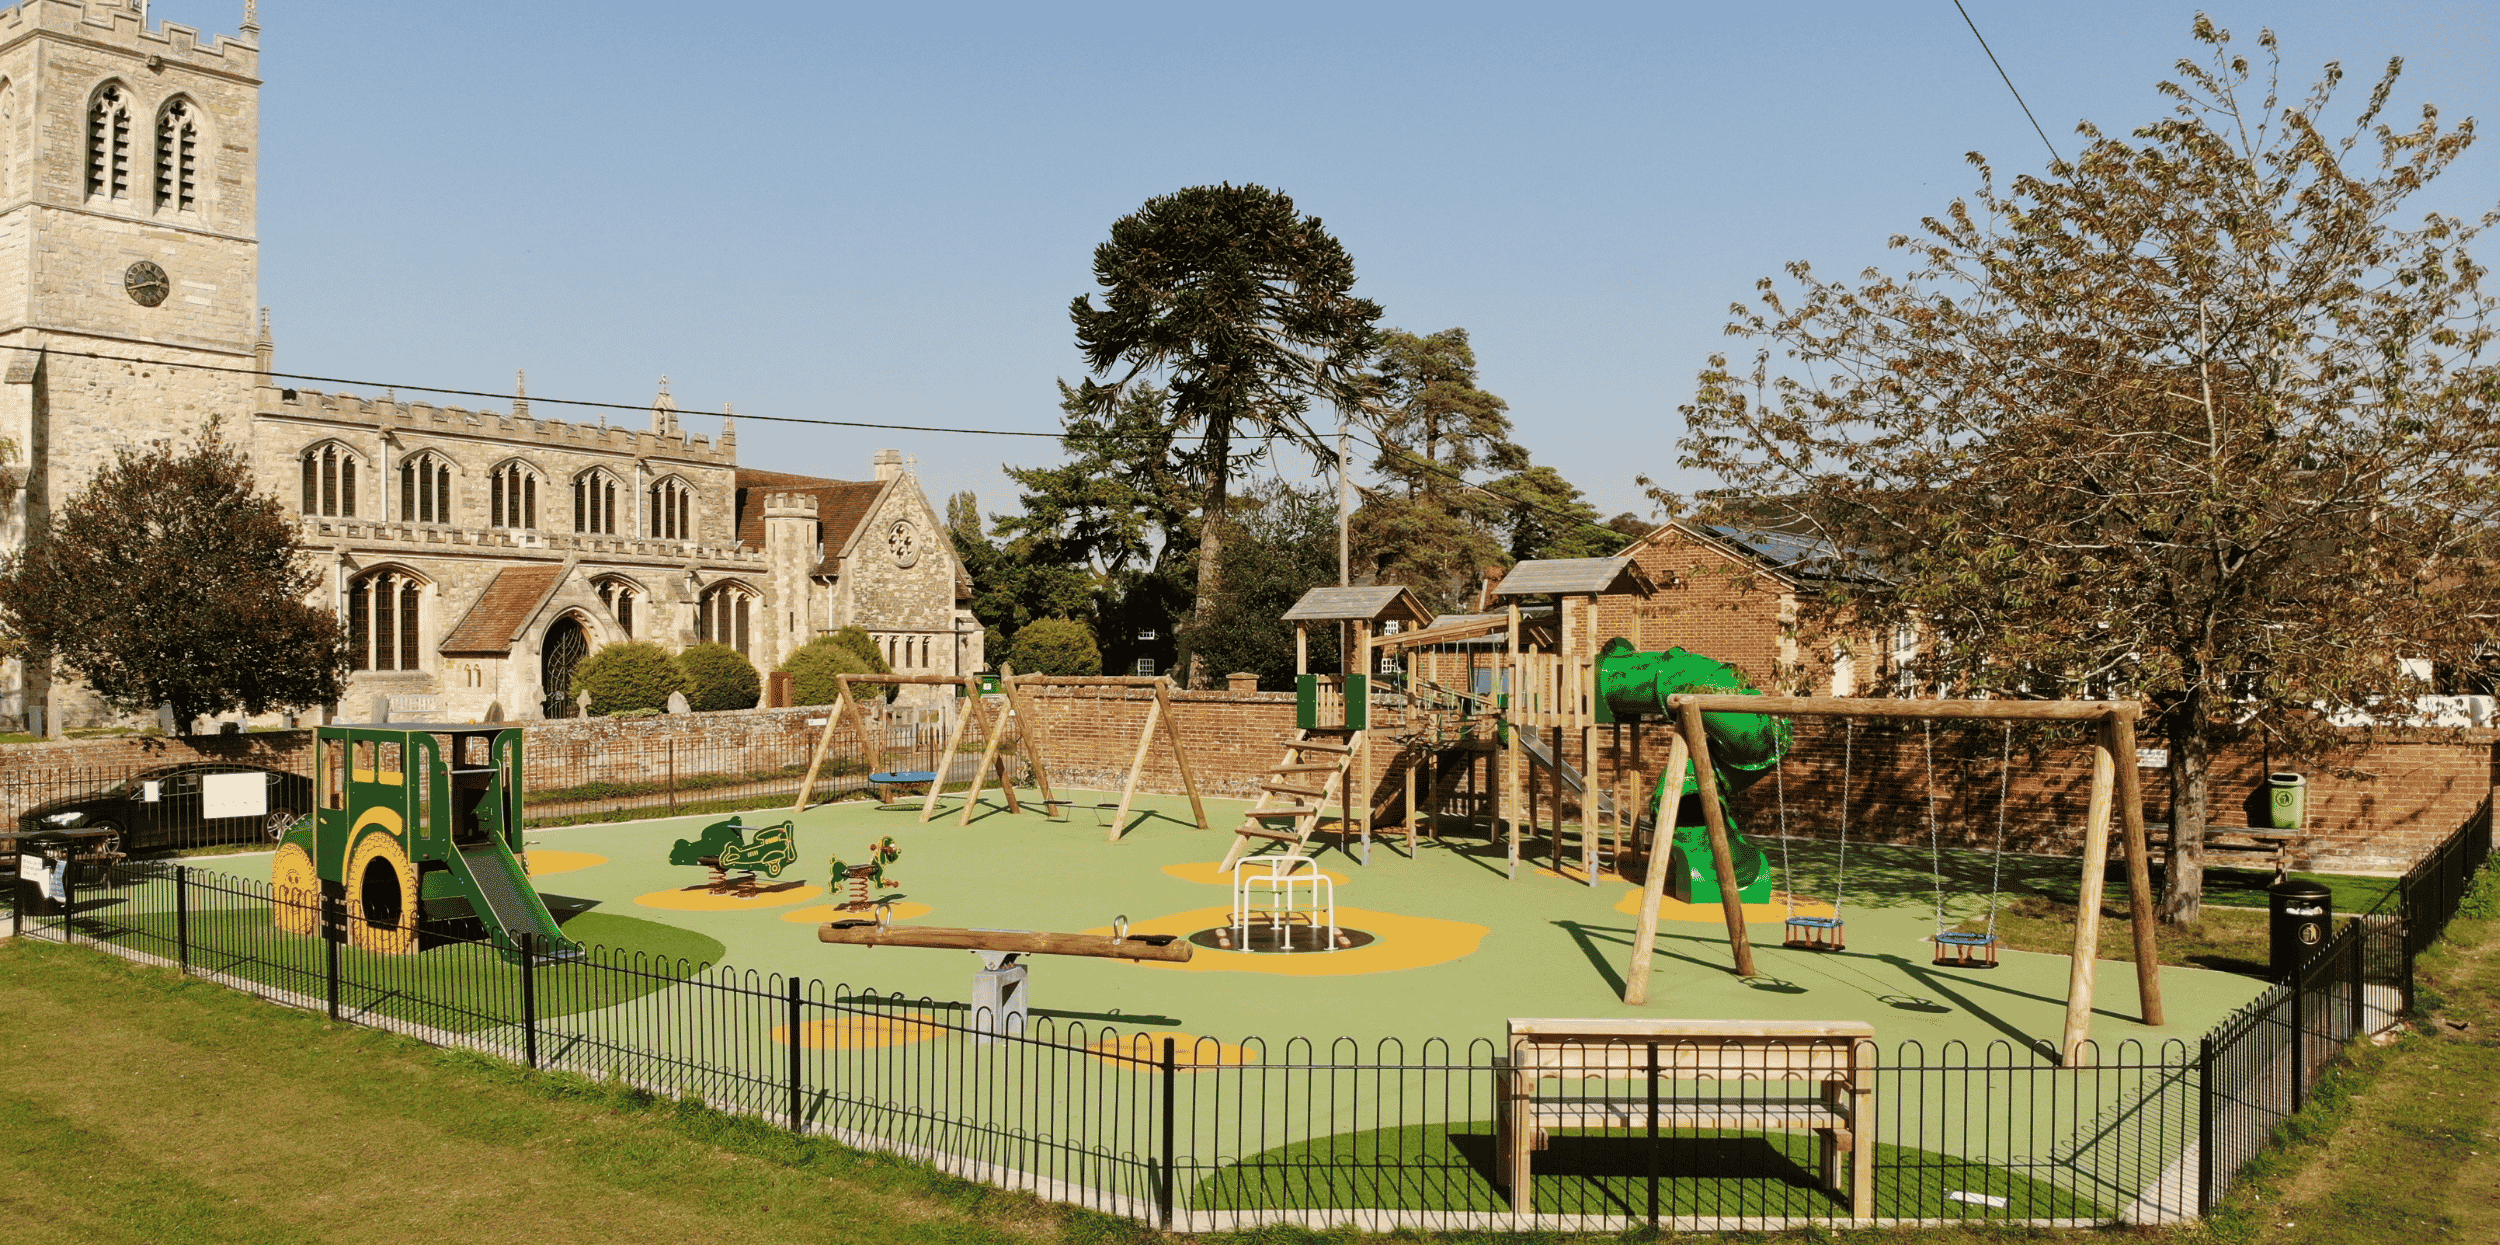 Parish Council Playground